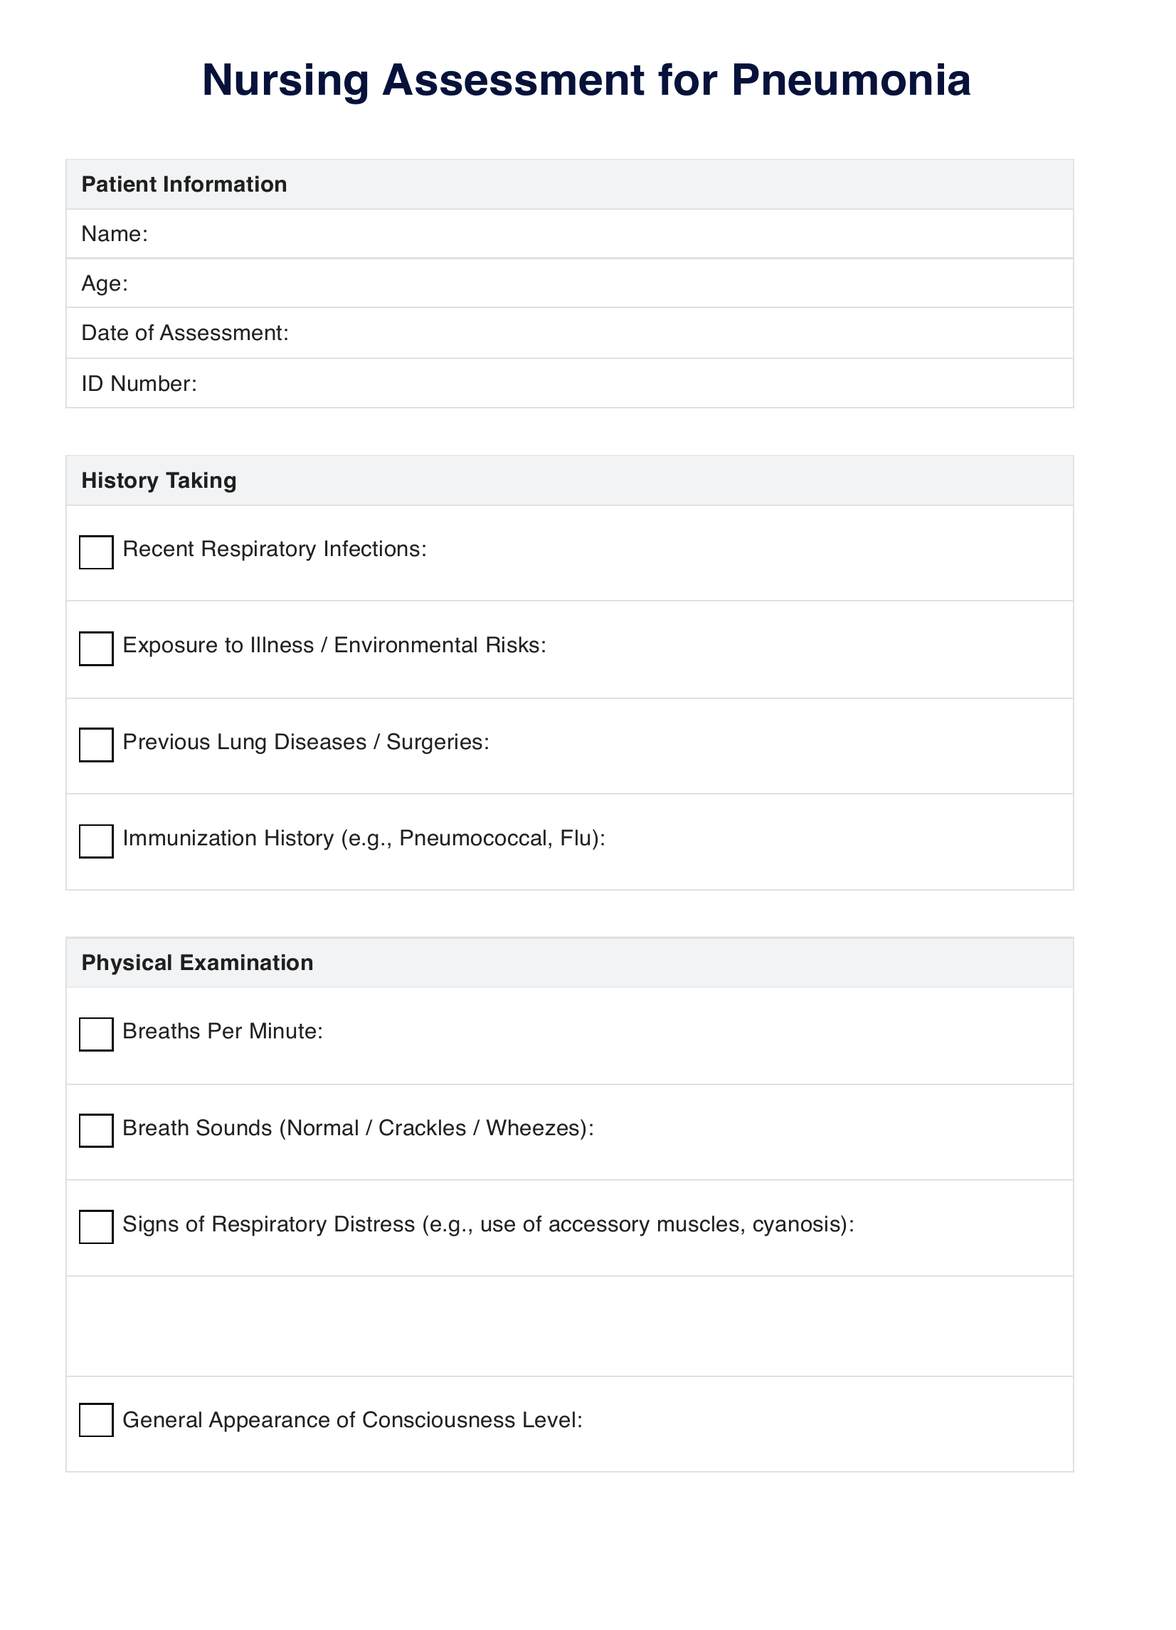 Nursing assessment for pneumonia PDF Example